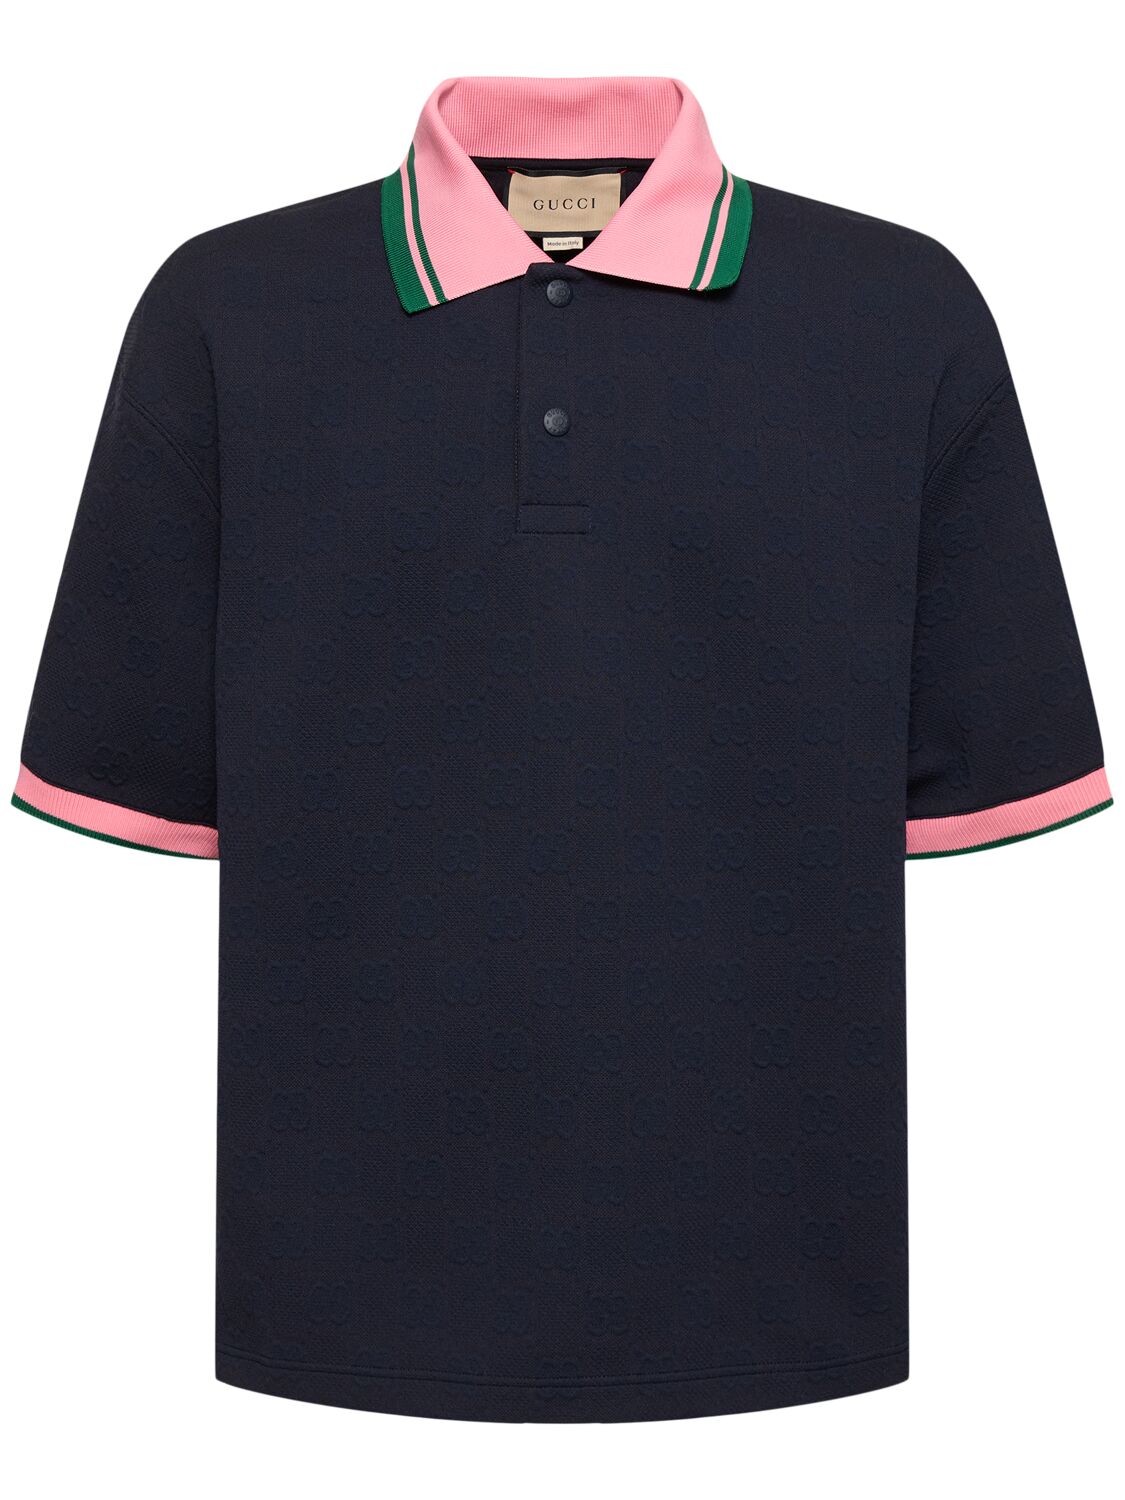 Gucci Gg Jacquard Polo Shirt In Navy